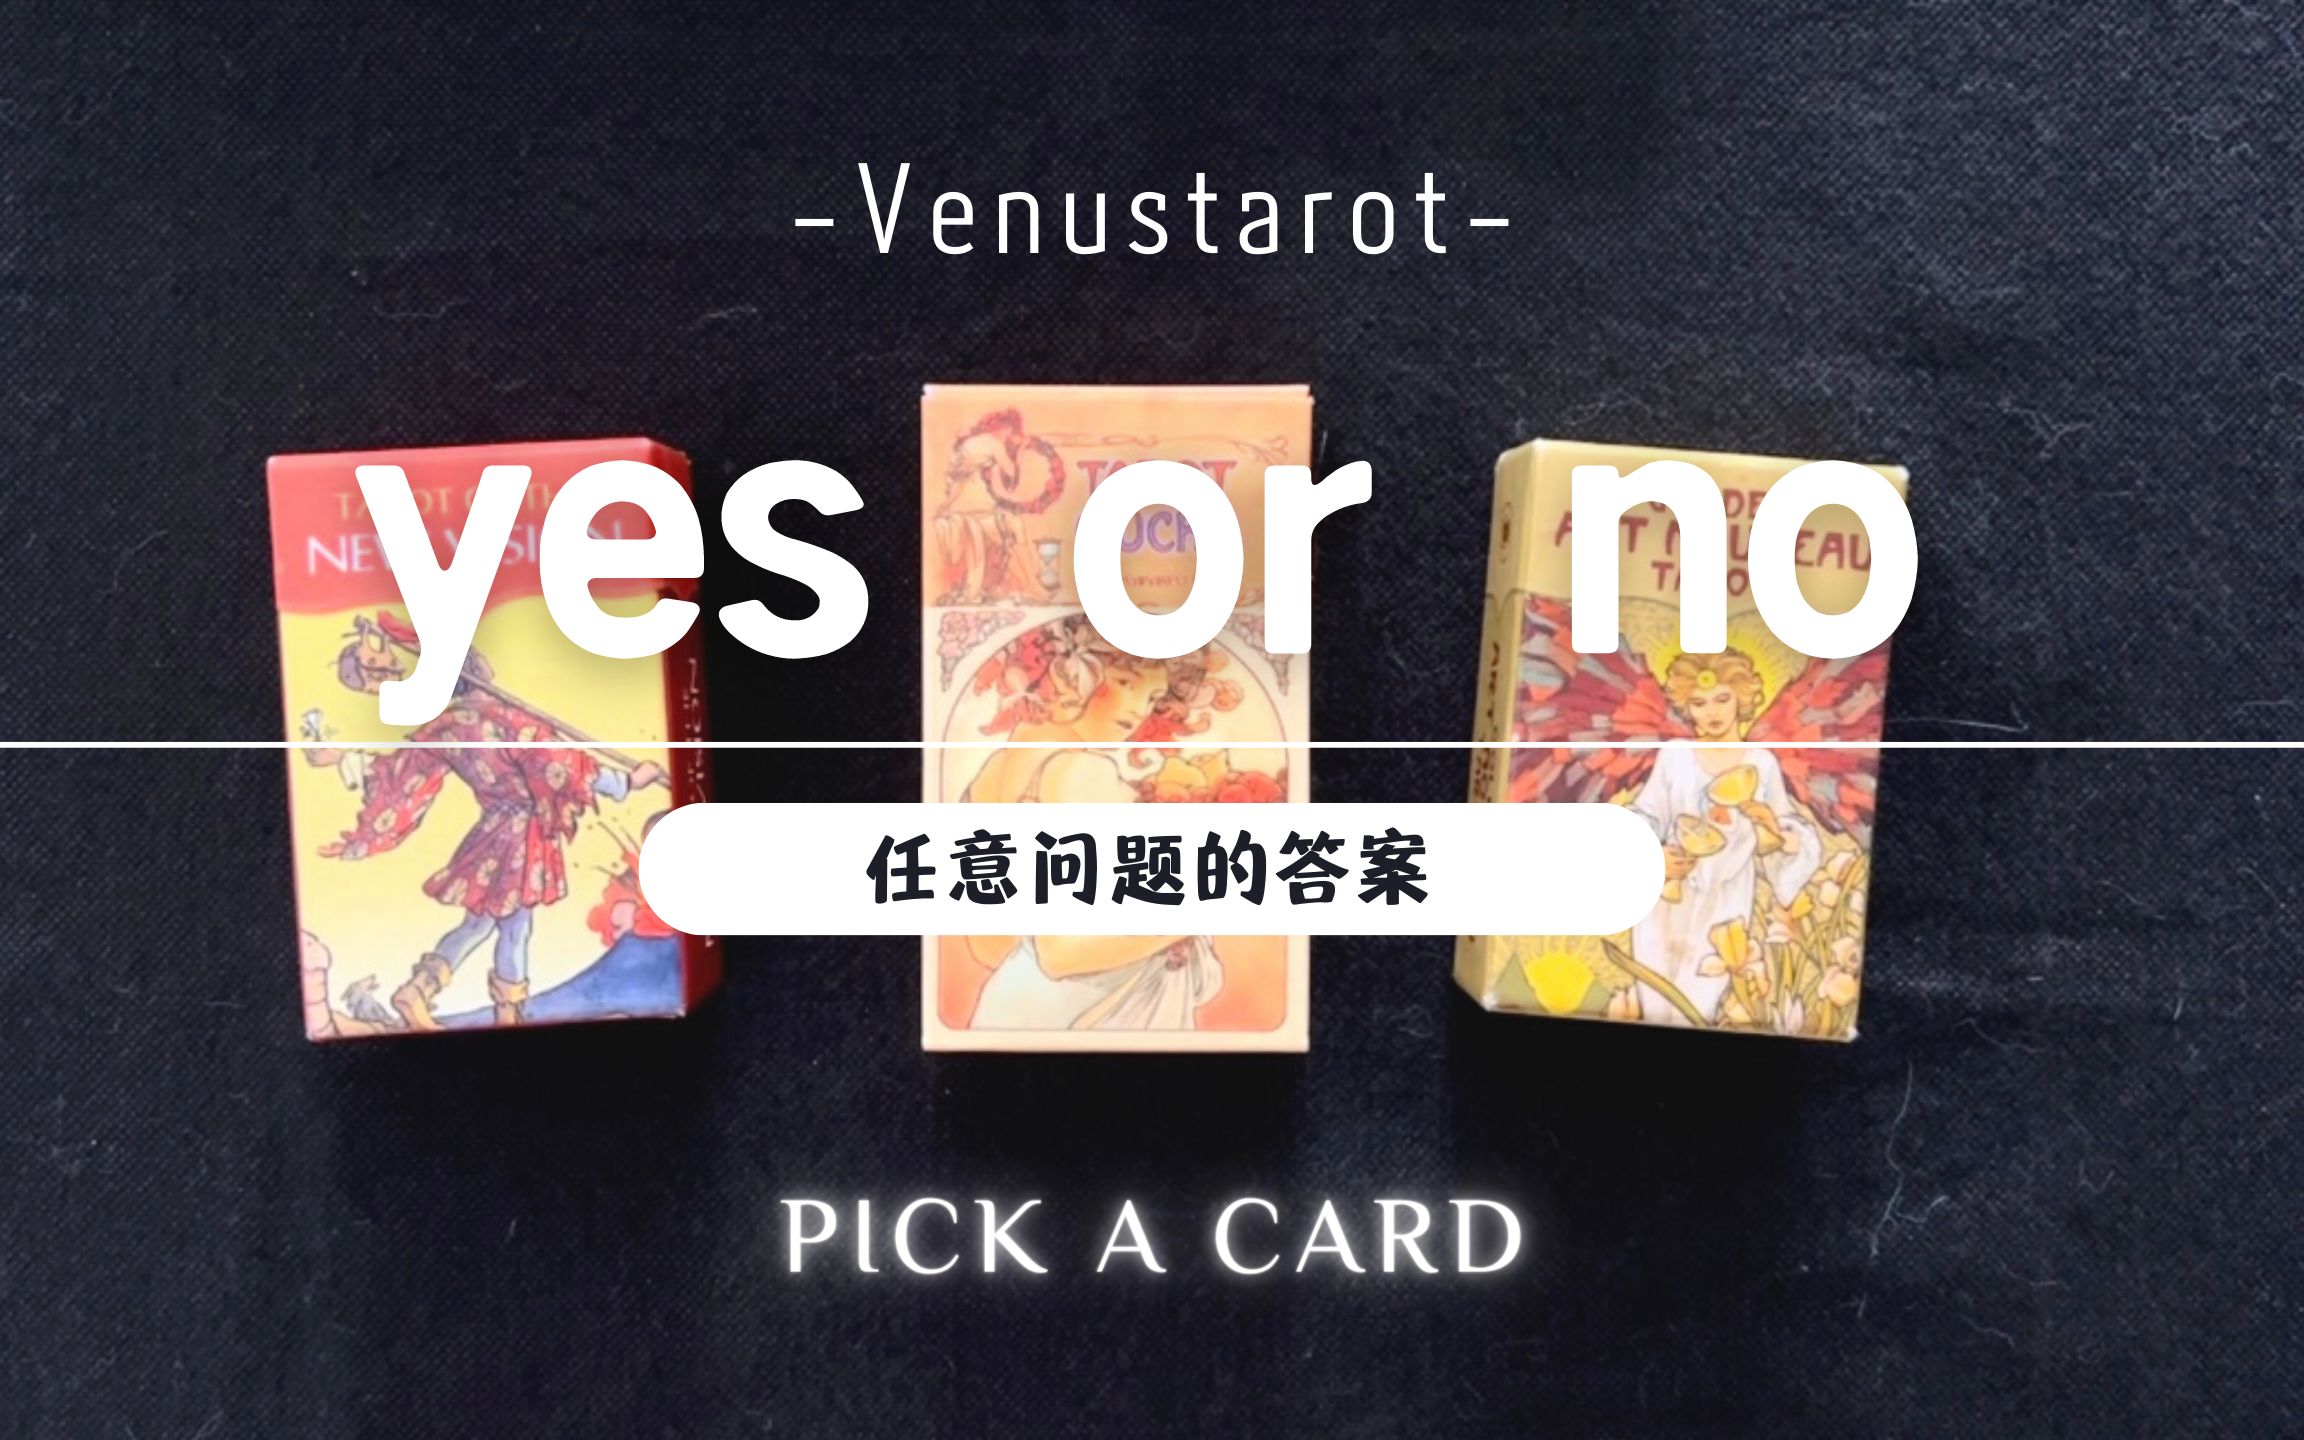 【Venus塔罗】心中默念一个问题，结果是yes or no？